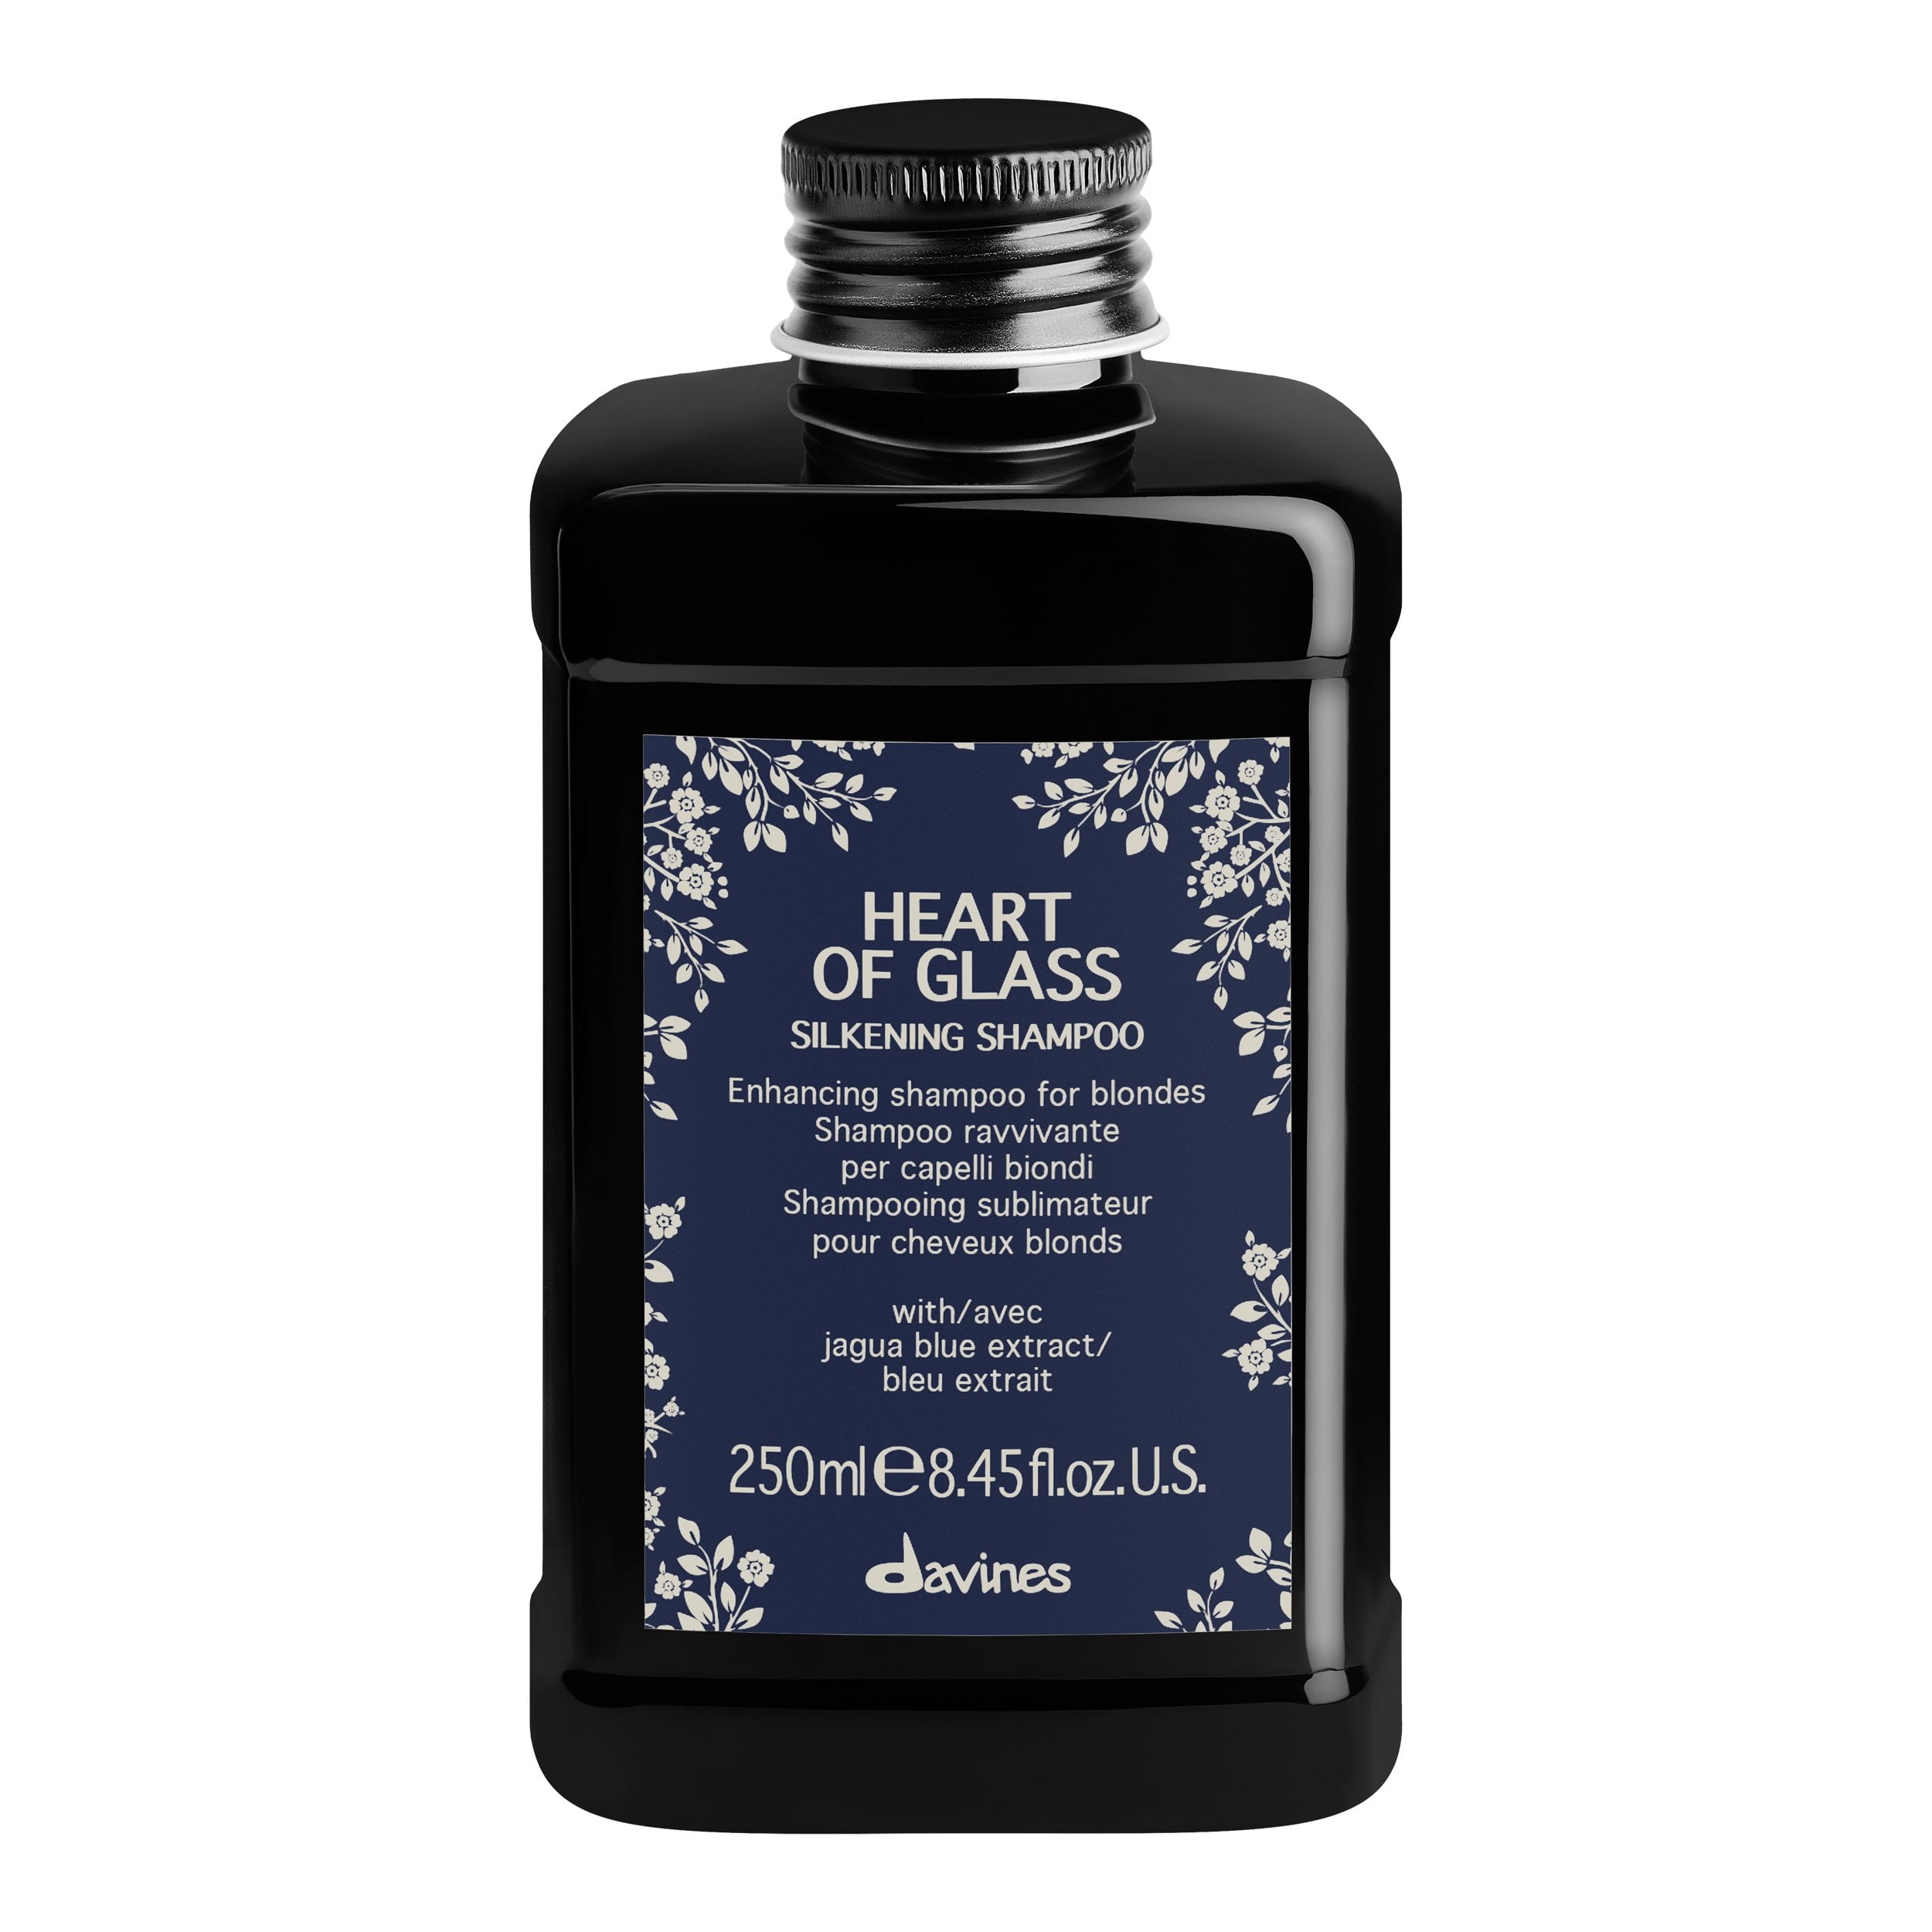 Heart of Glass Silkening Shampoo 250ml | Hair & Beauty